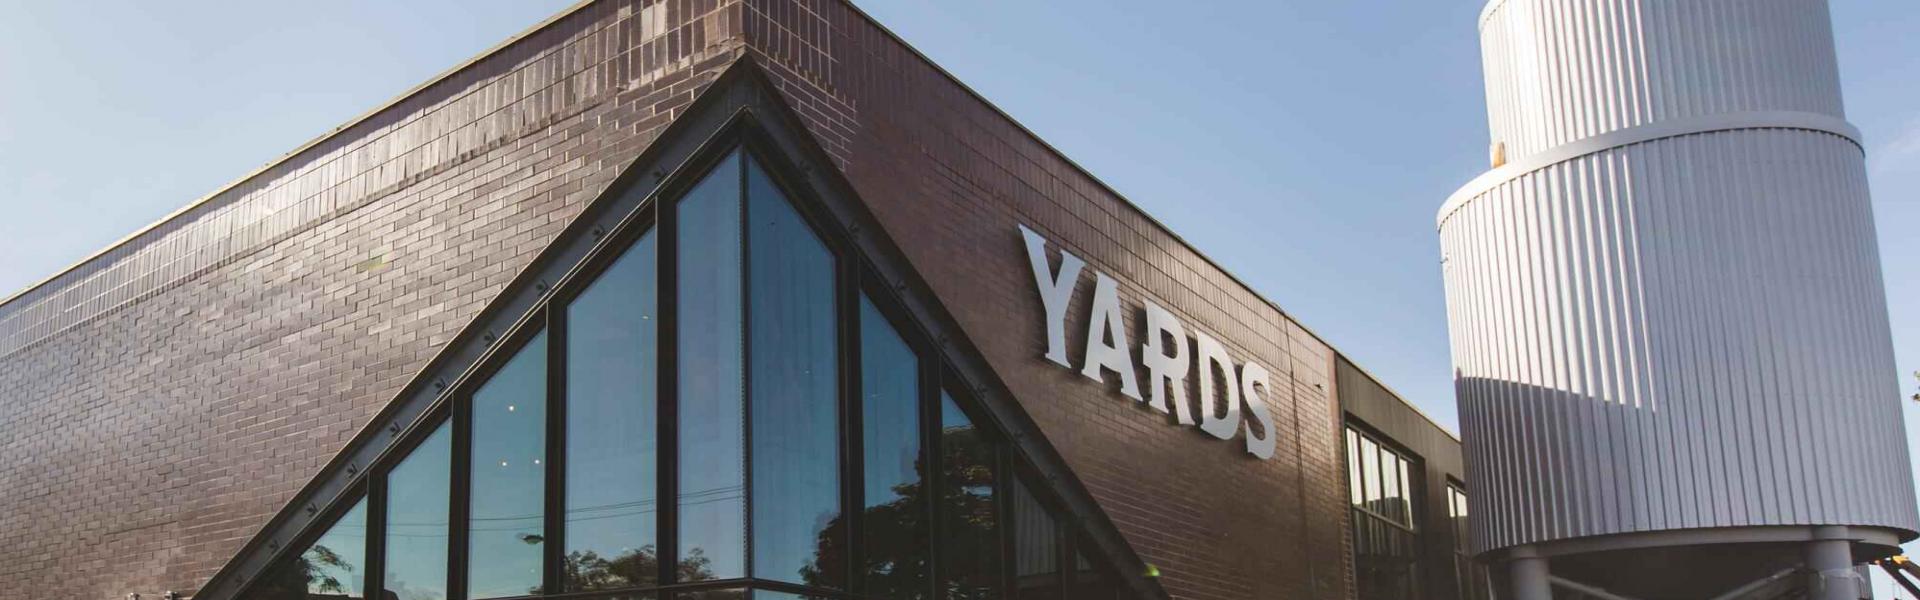 Yards Brewing Company Main Image